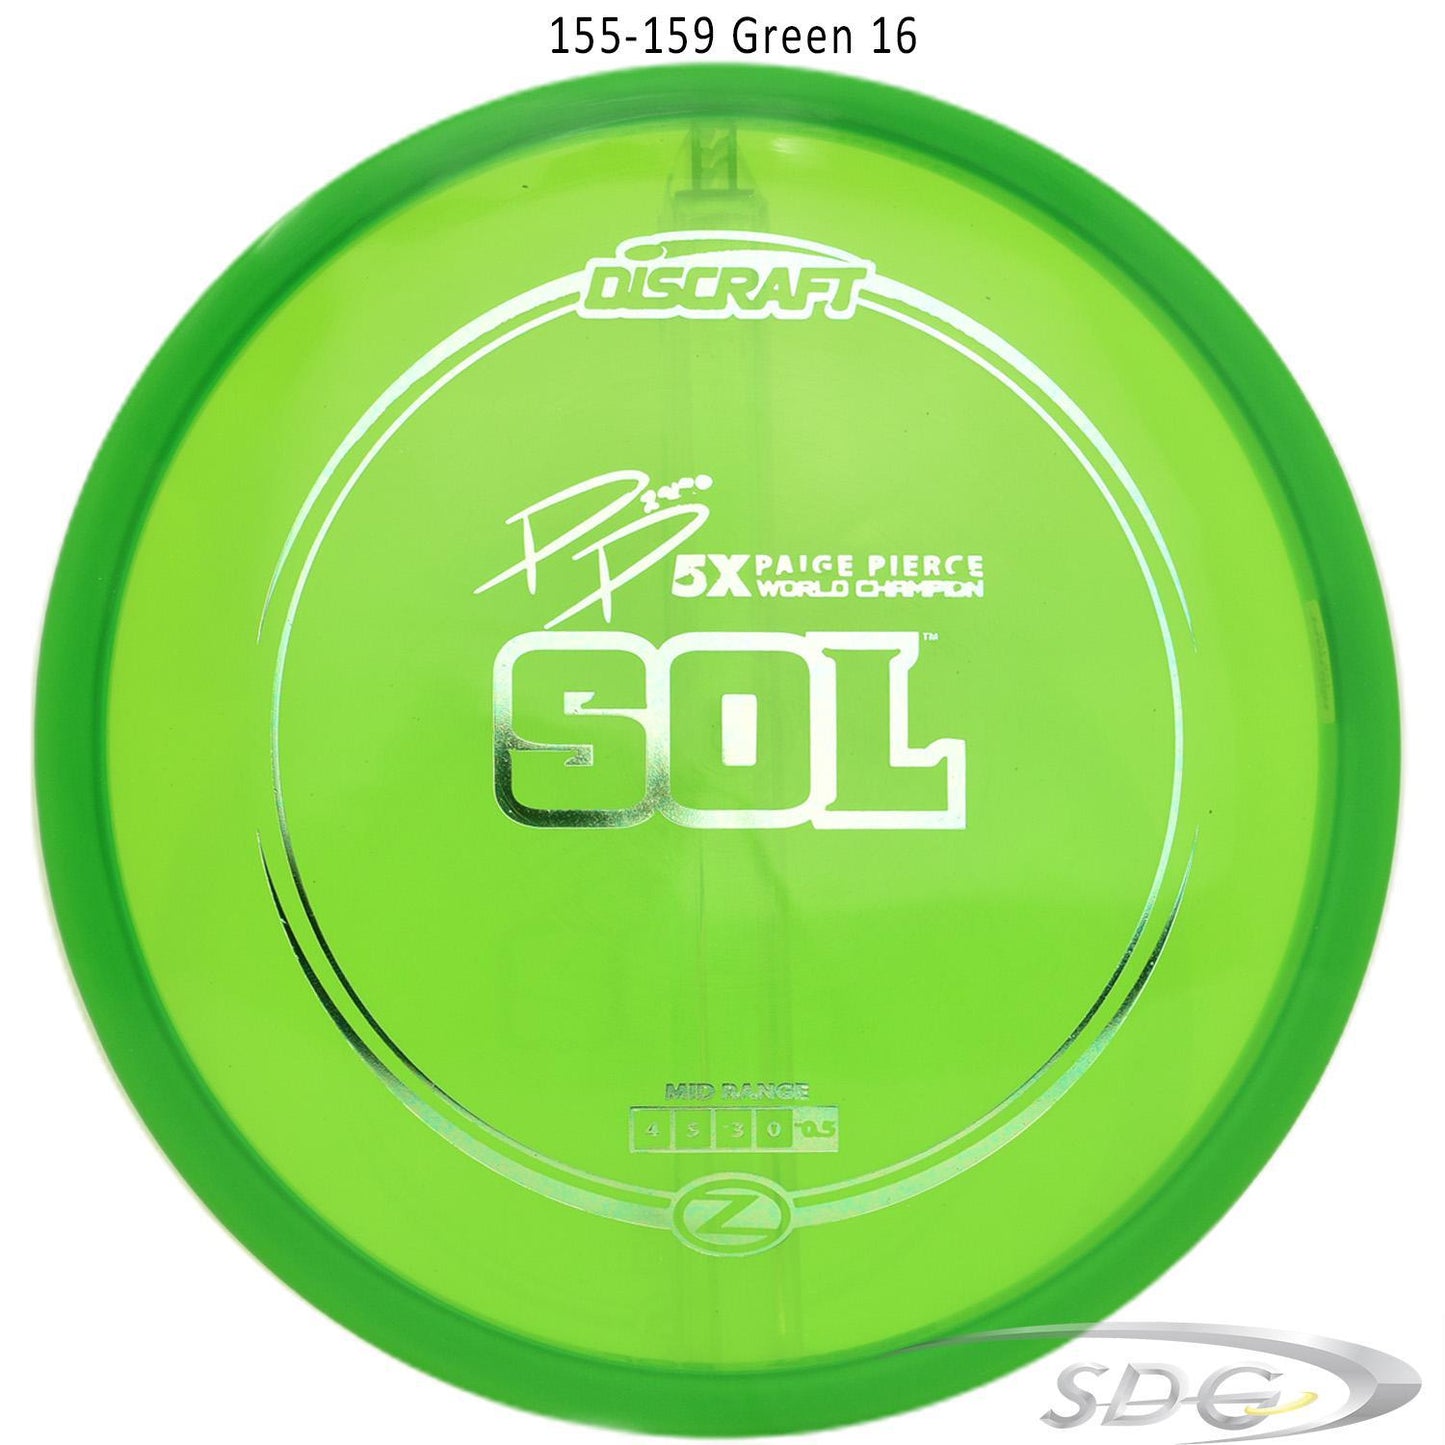 discraft-z-line-sol-paige-pierce-signature-disc-golf-mid-range 155-159 Green 16